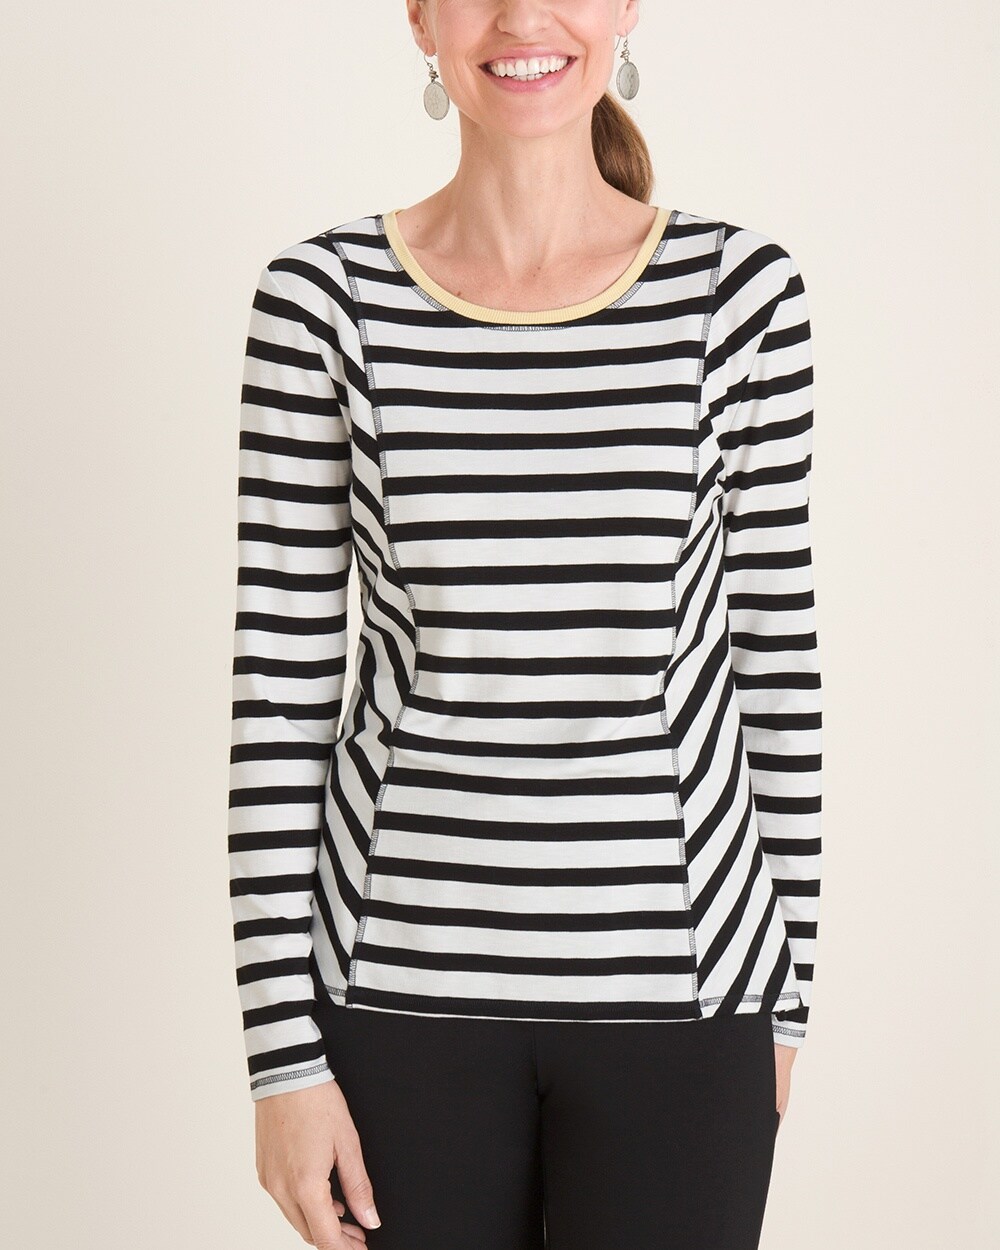 Zenergy Black and White Mixed-Stripe Top